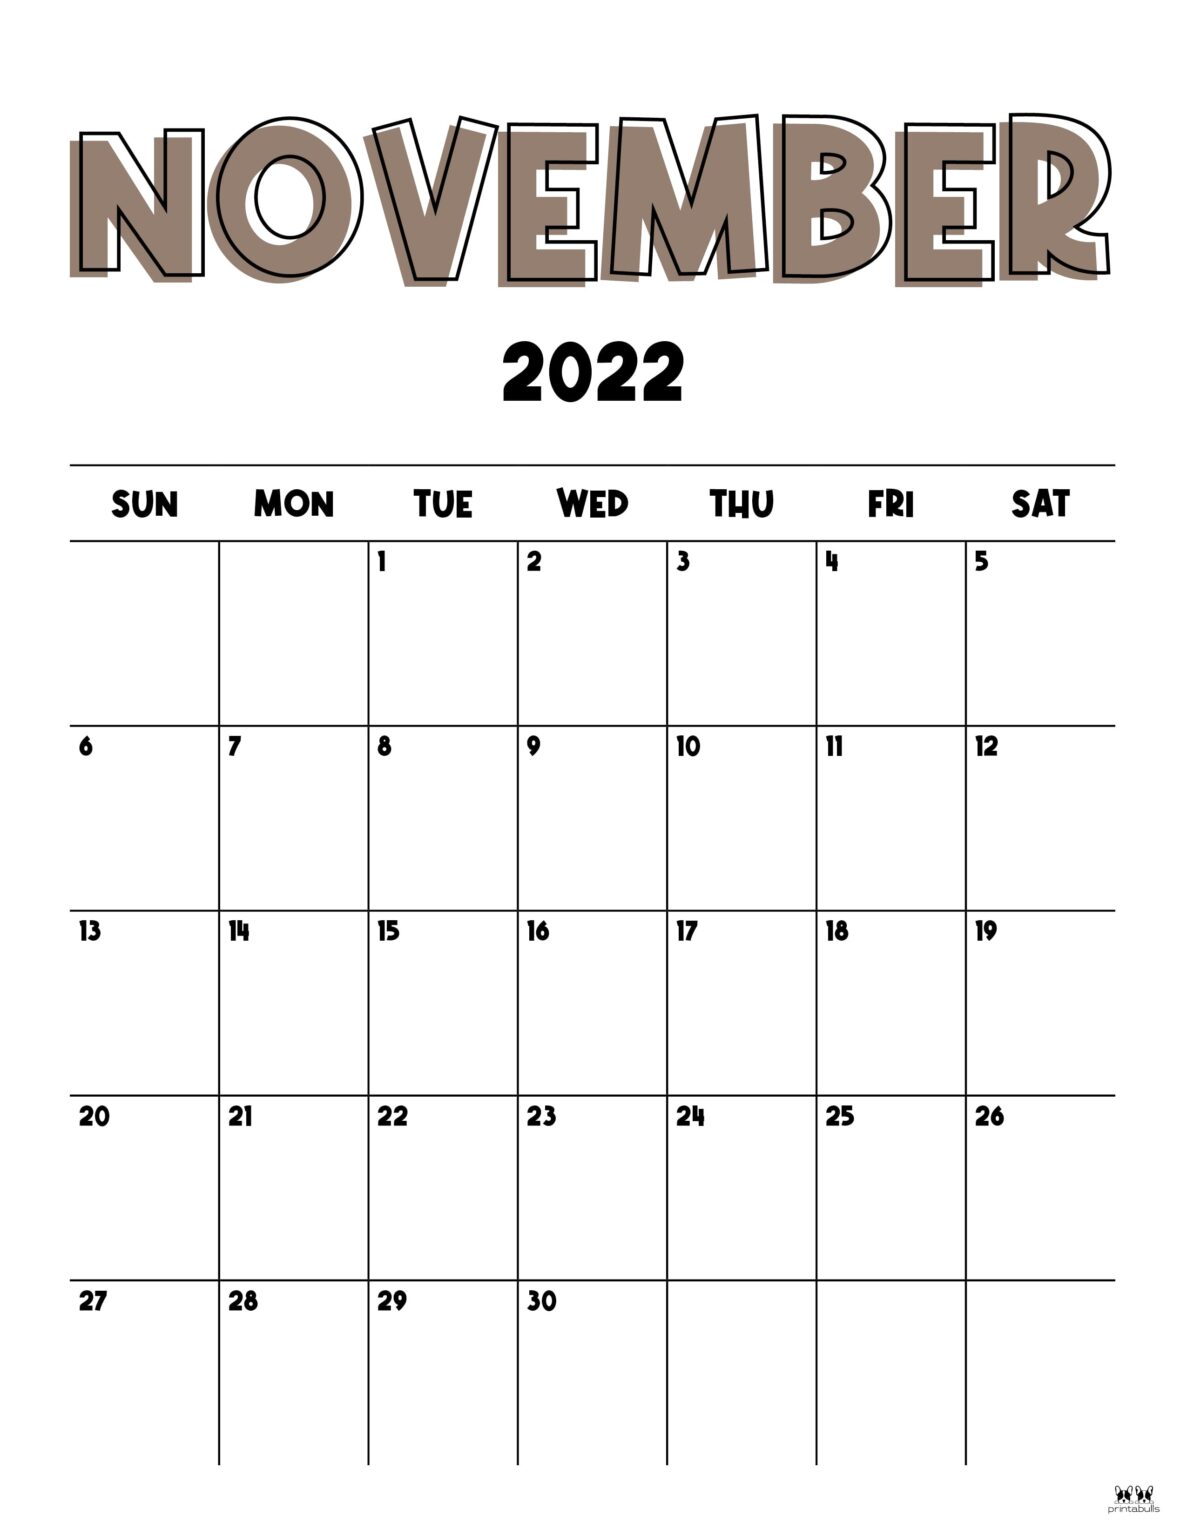 November 2022 Calendars - 50 FREE Printables | Printabulls